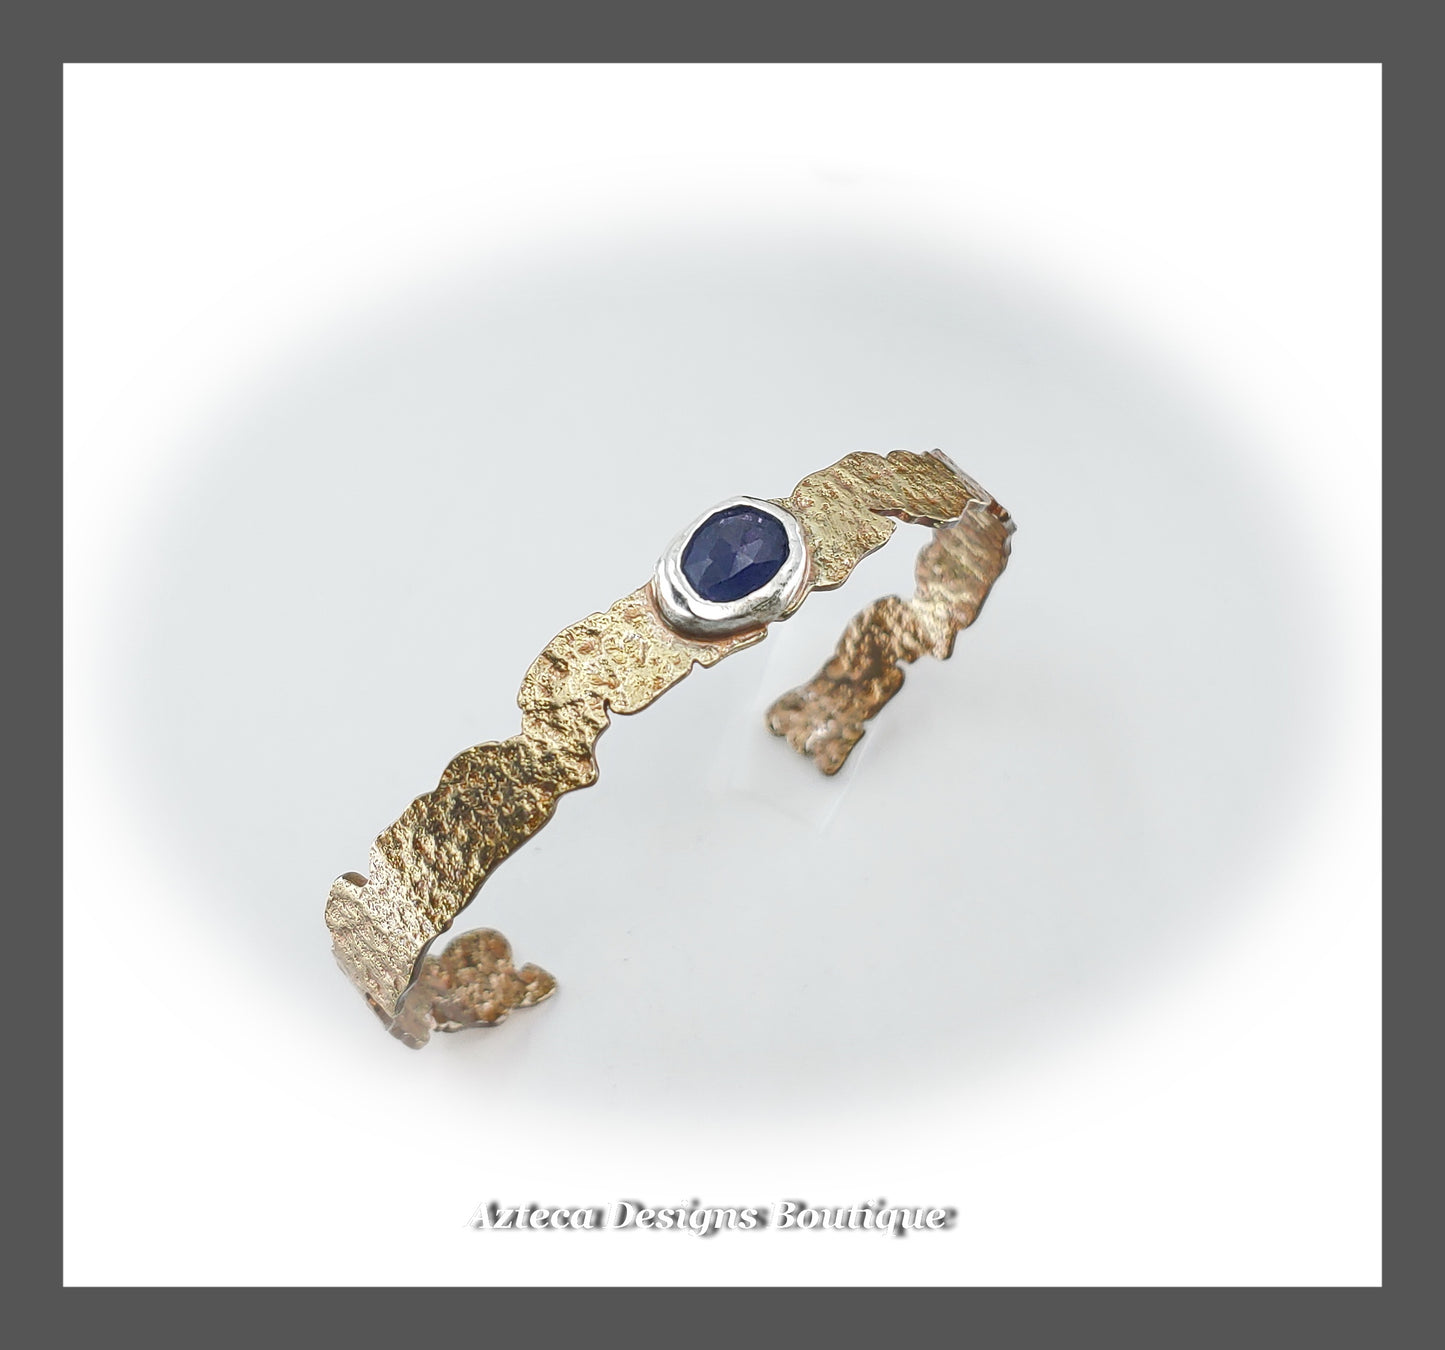 Narrow Tanzanite + Rustic Textured Brass Cuff Bracelet